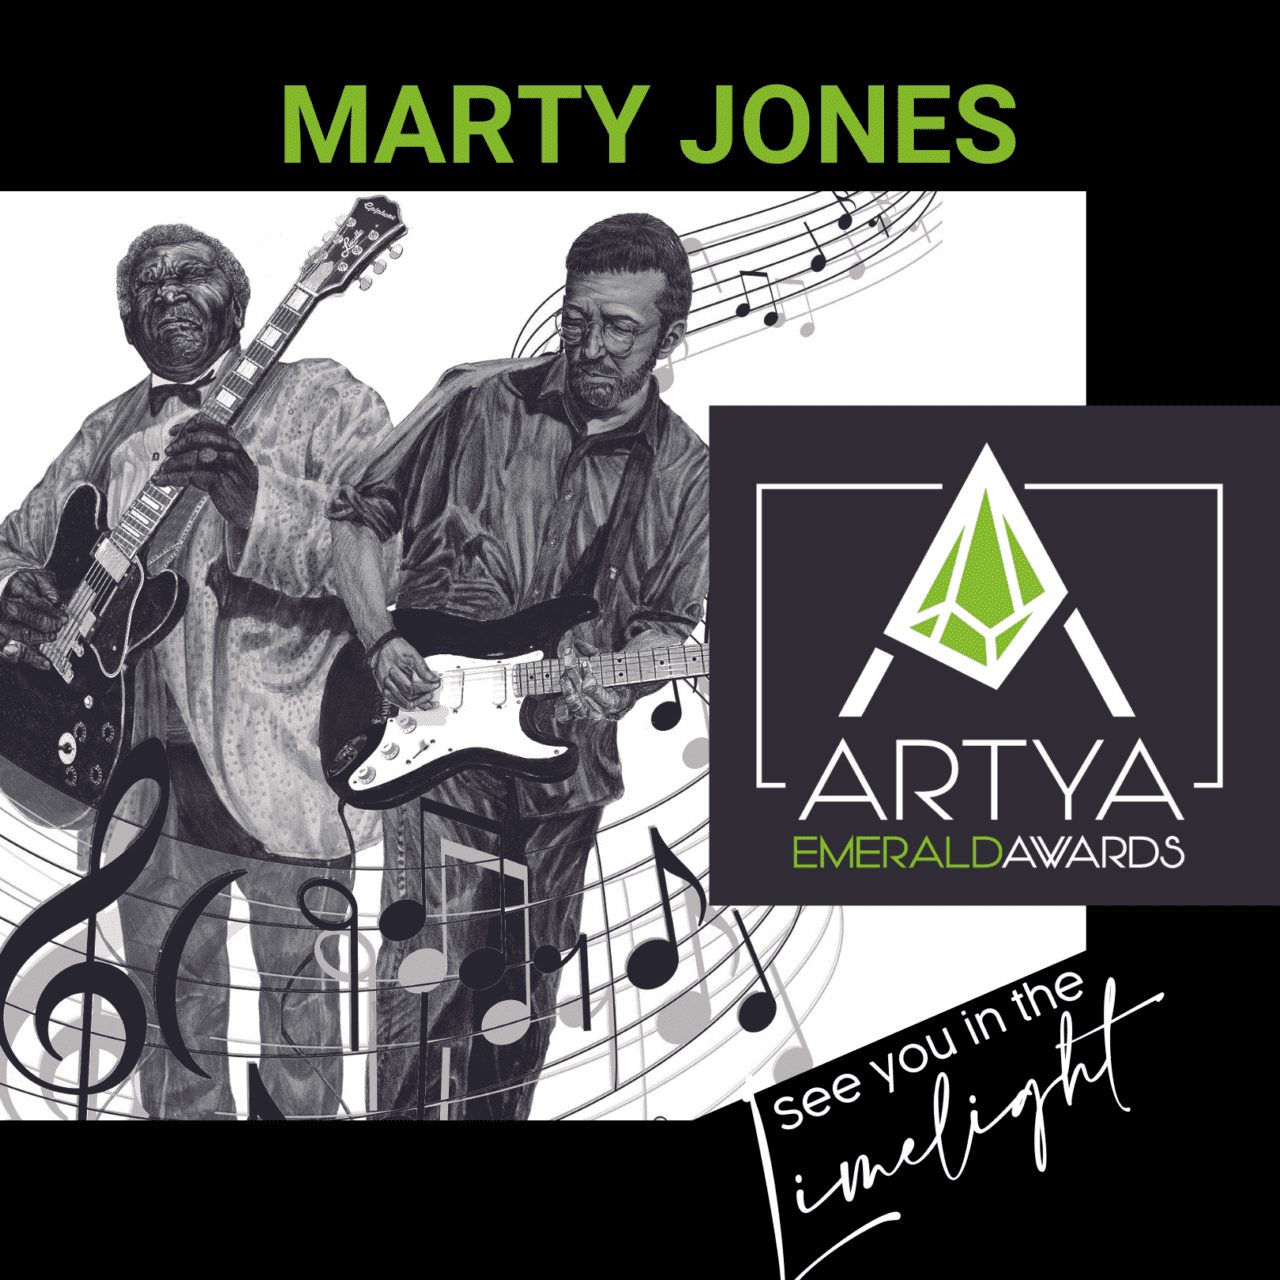 Marty Jones’ Stunning Illustrations